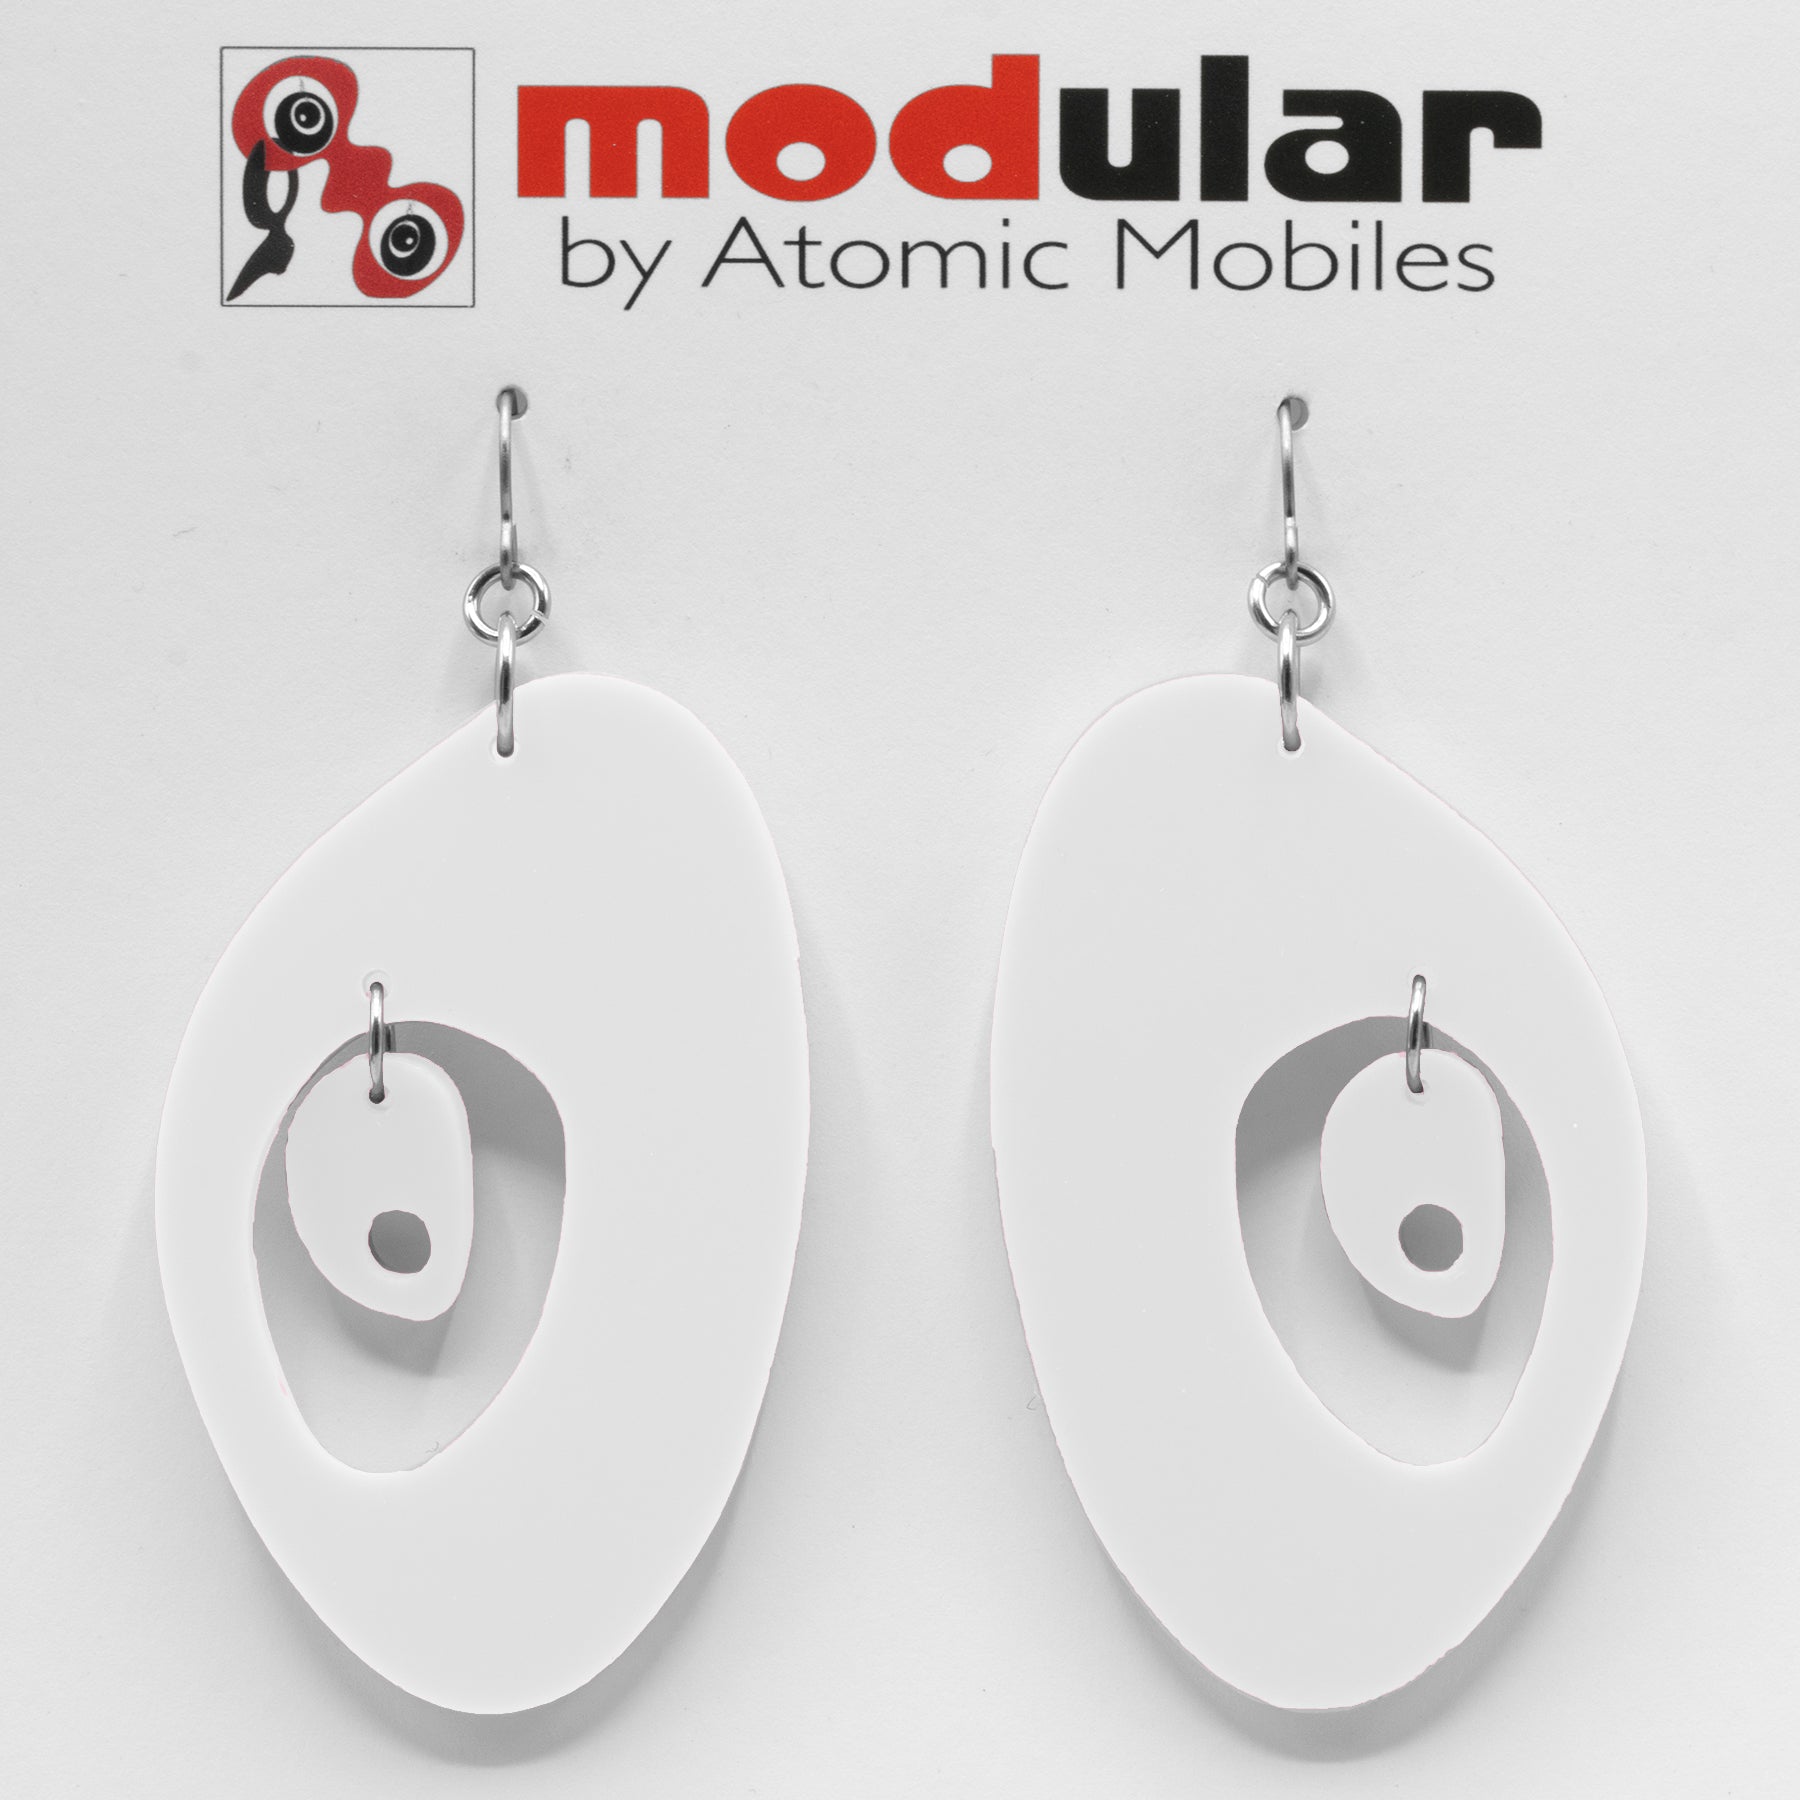 MODular Earrings - Modernist Statement Earrings in White by AtomicMobiles.com - retro era inspired mod handmade jewelry